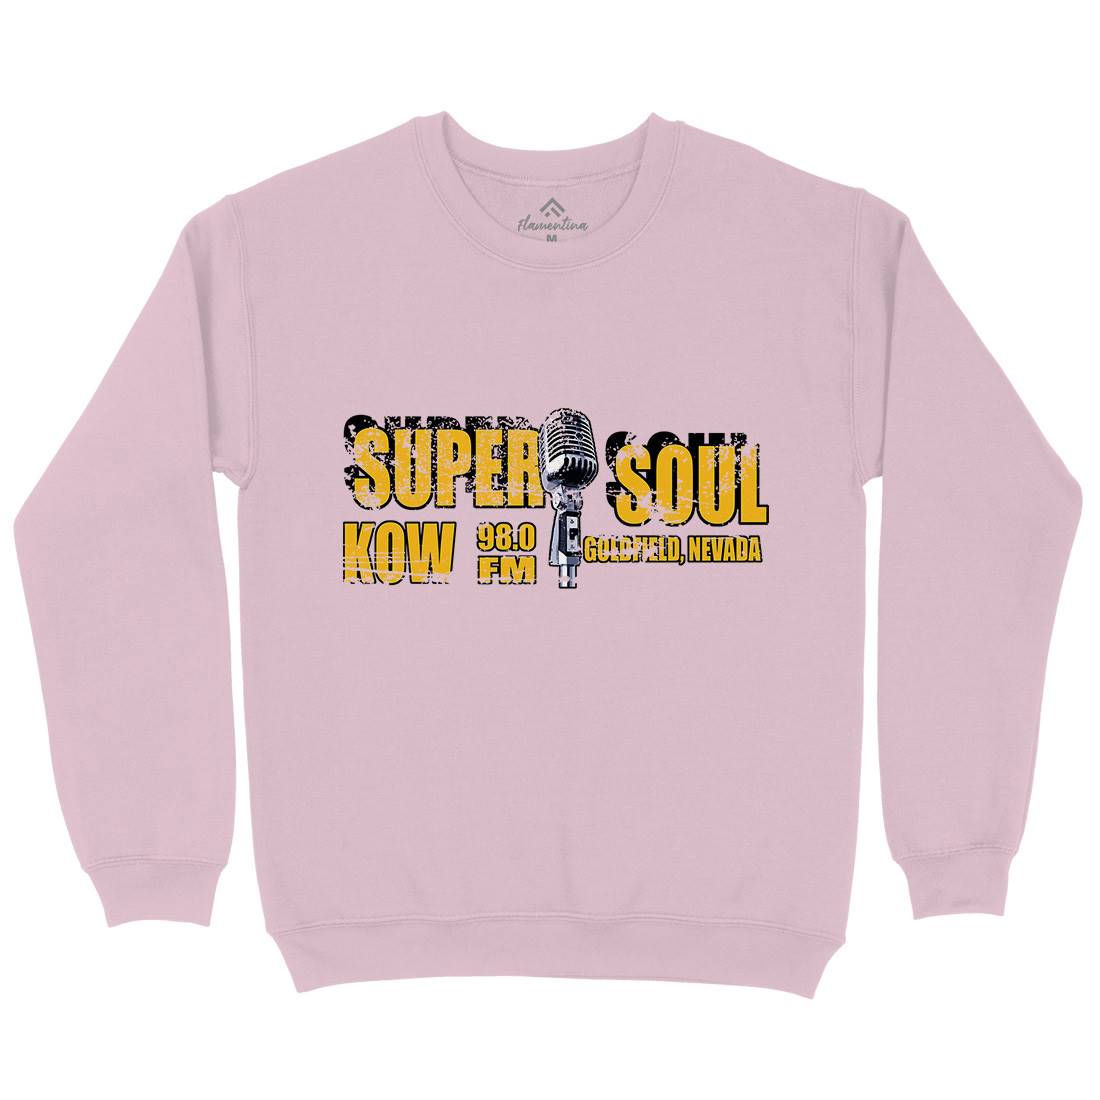 Super Soul Kids Crew Neck Sweatshirt Music D392